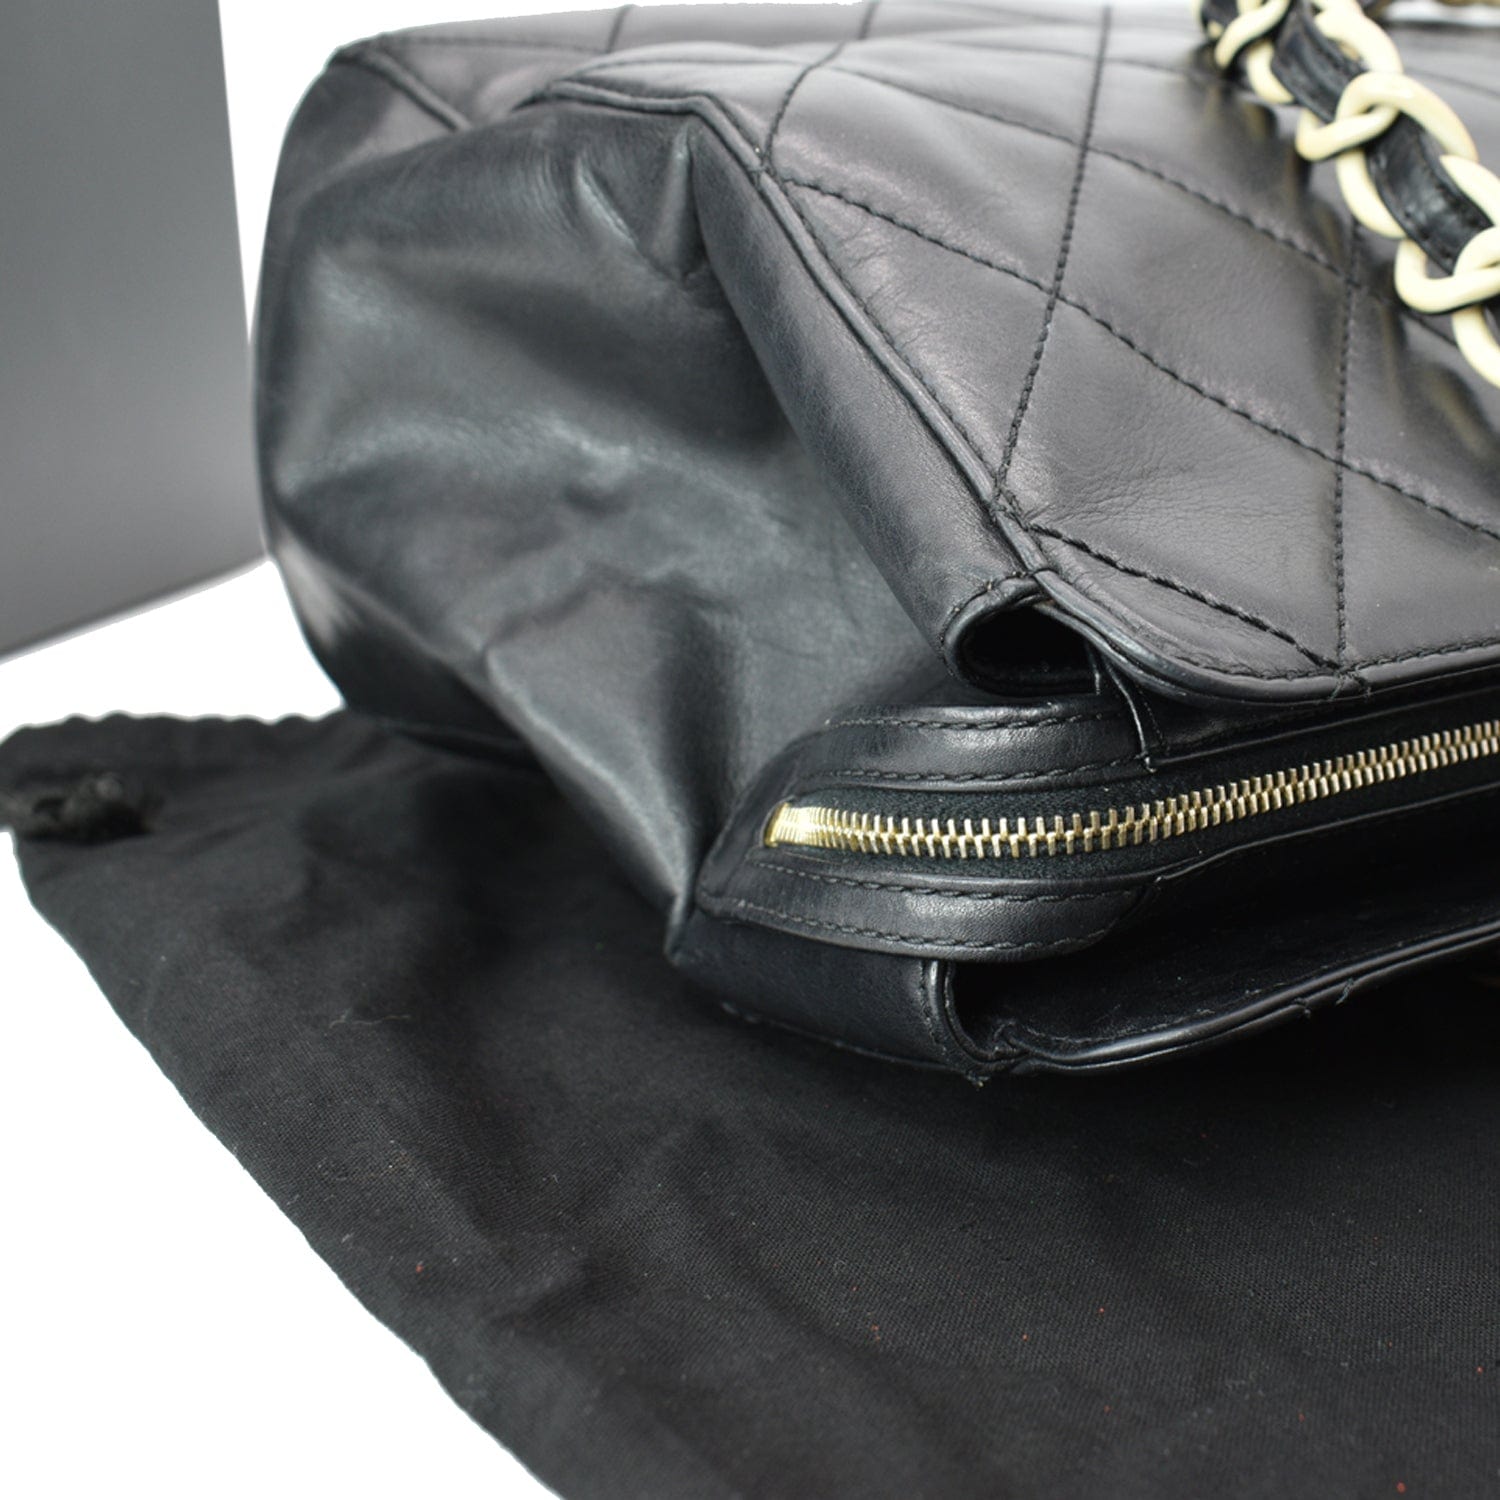 Vintage Chanel Black Quilted Lambskin Leather Large Shoulder Tote